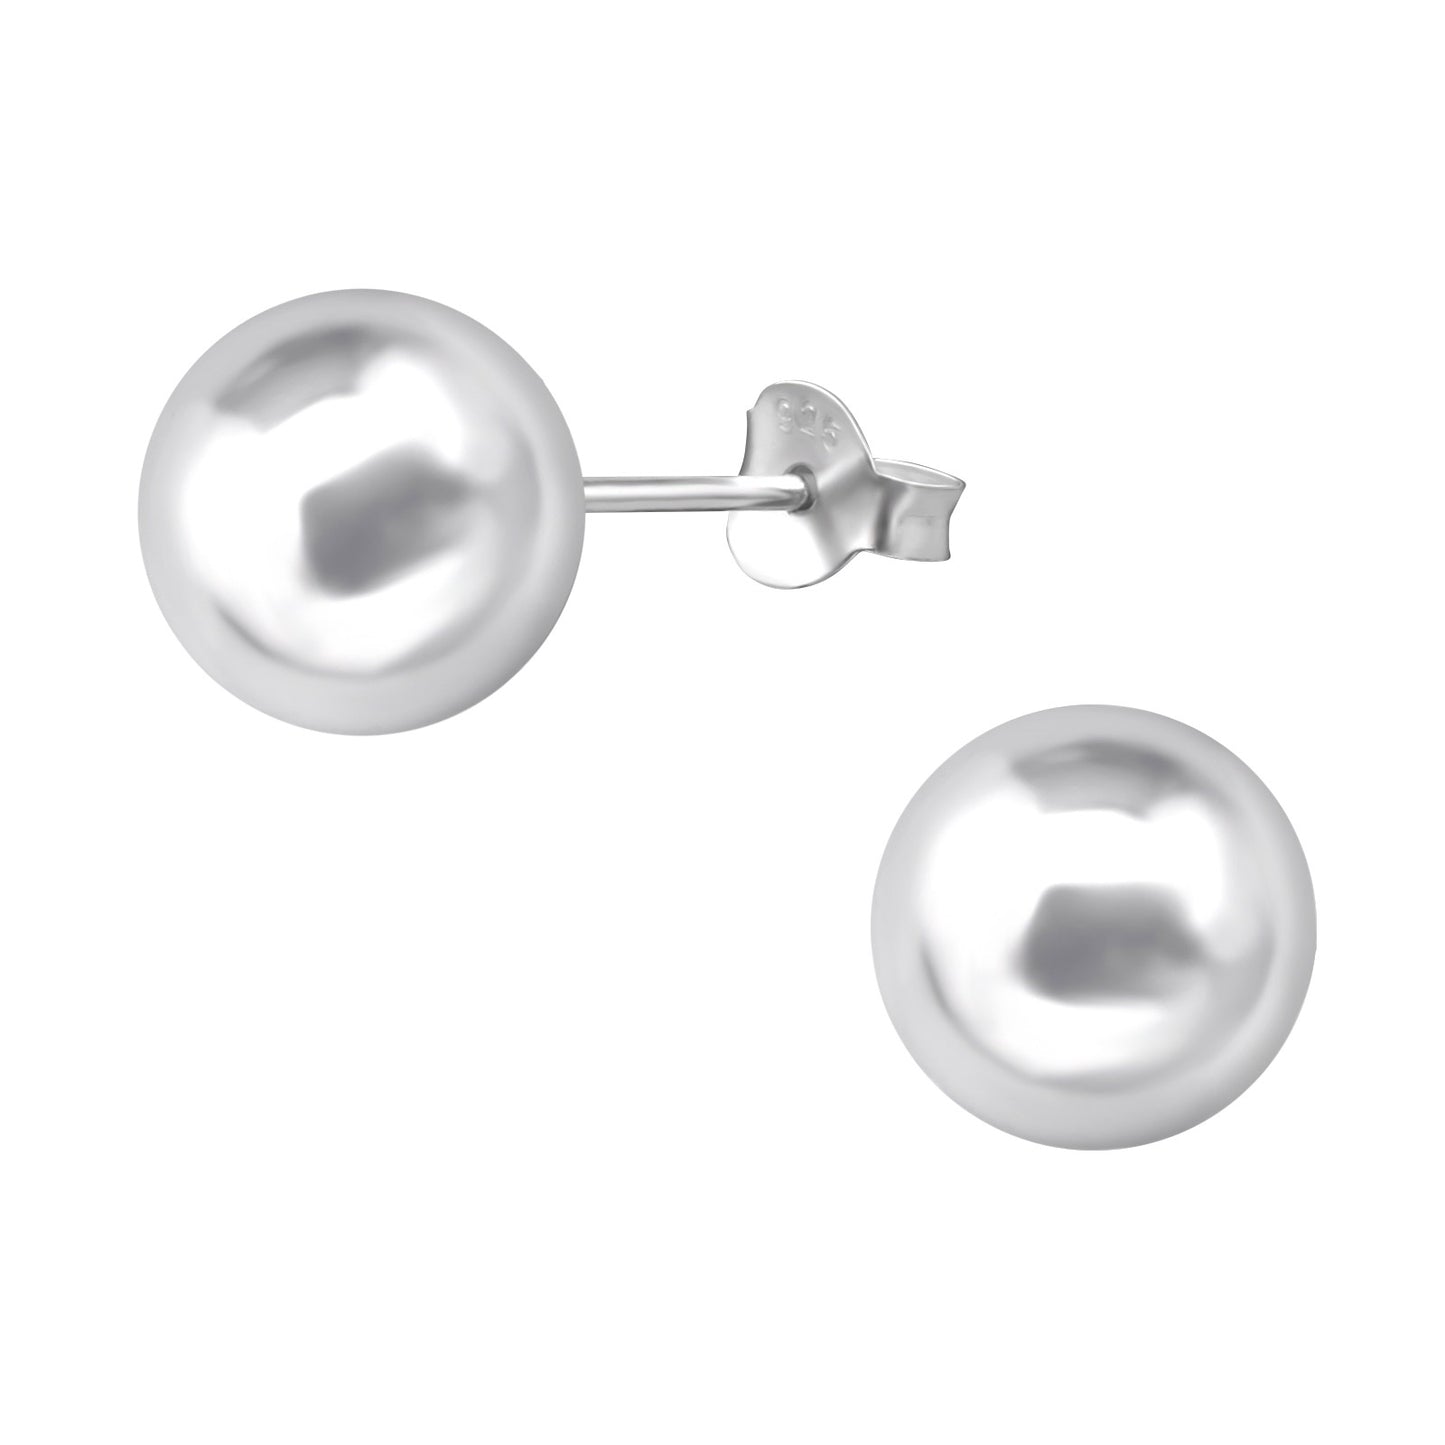 sterling silver earrings, sterling silver earrings for women, ladies sterling silver earrings, handmade jewellery, contemporary jewellery, silver studs 